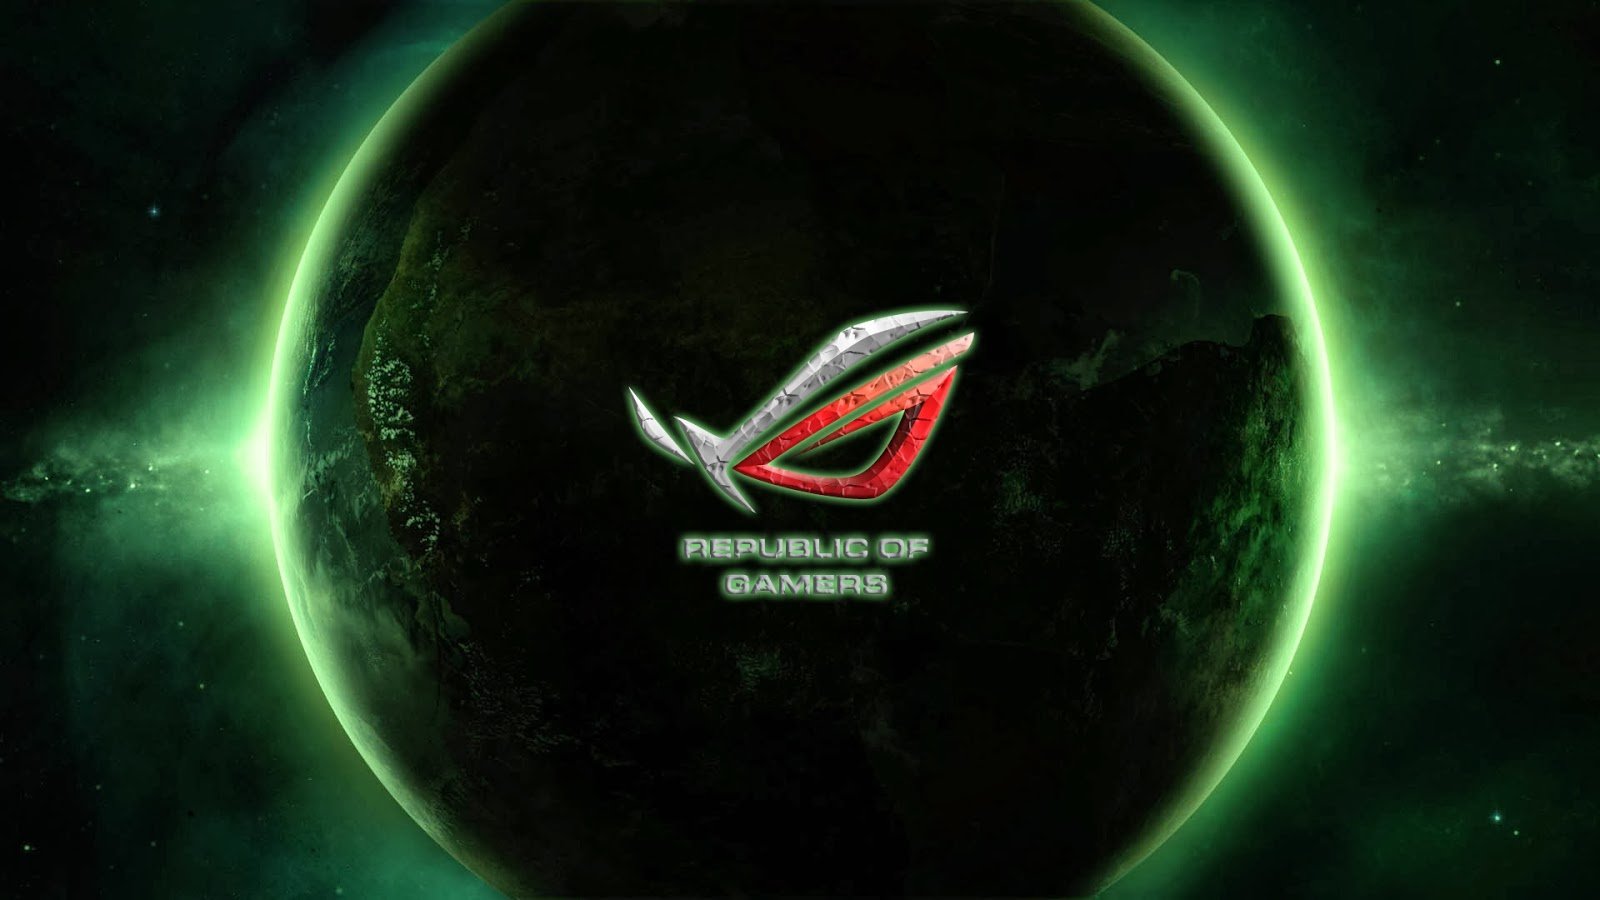 Asu Republic of Gamers Logo Brand Space Planet Widescreen HD Wallpaper 1600x900